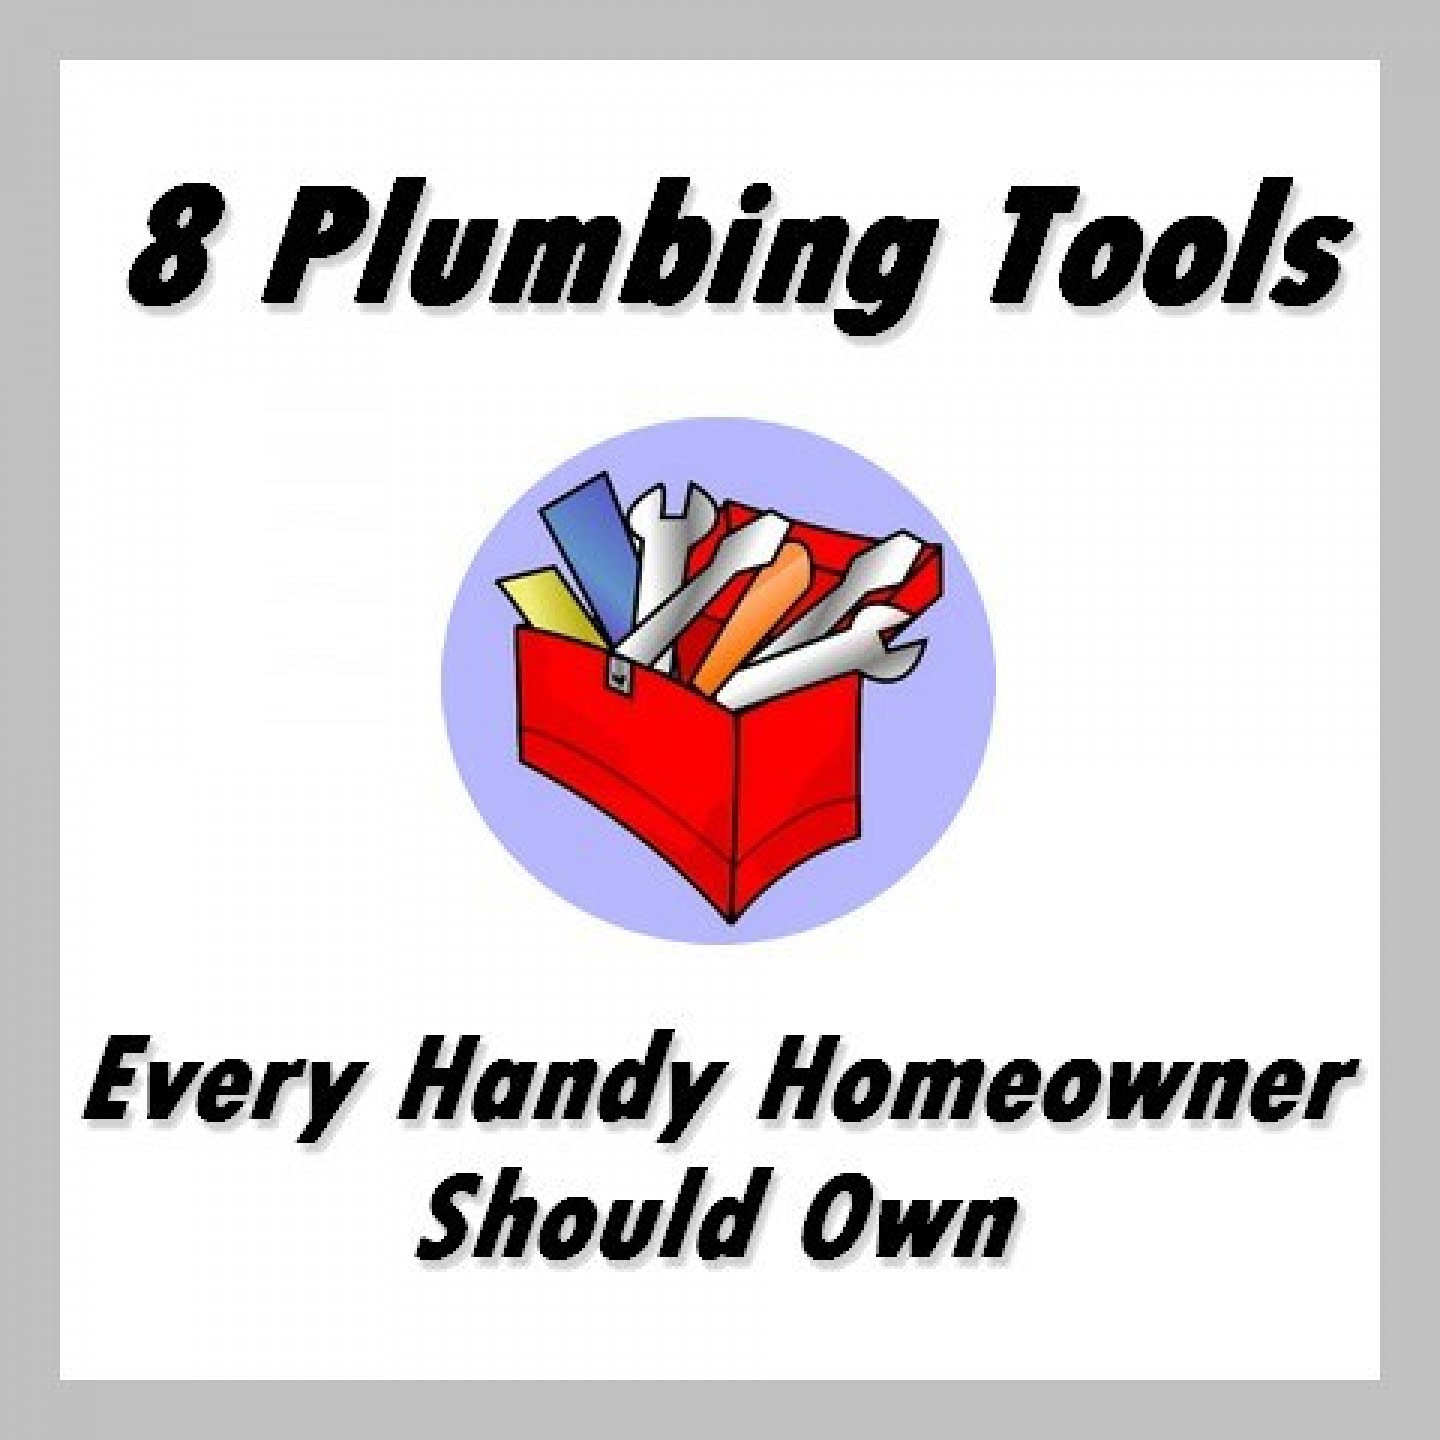 8 plumbing tools